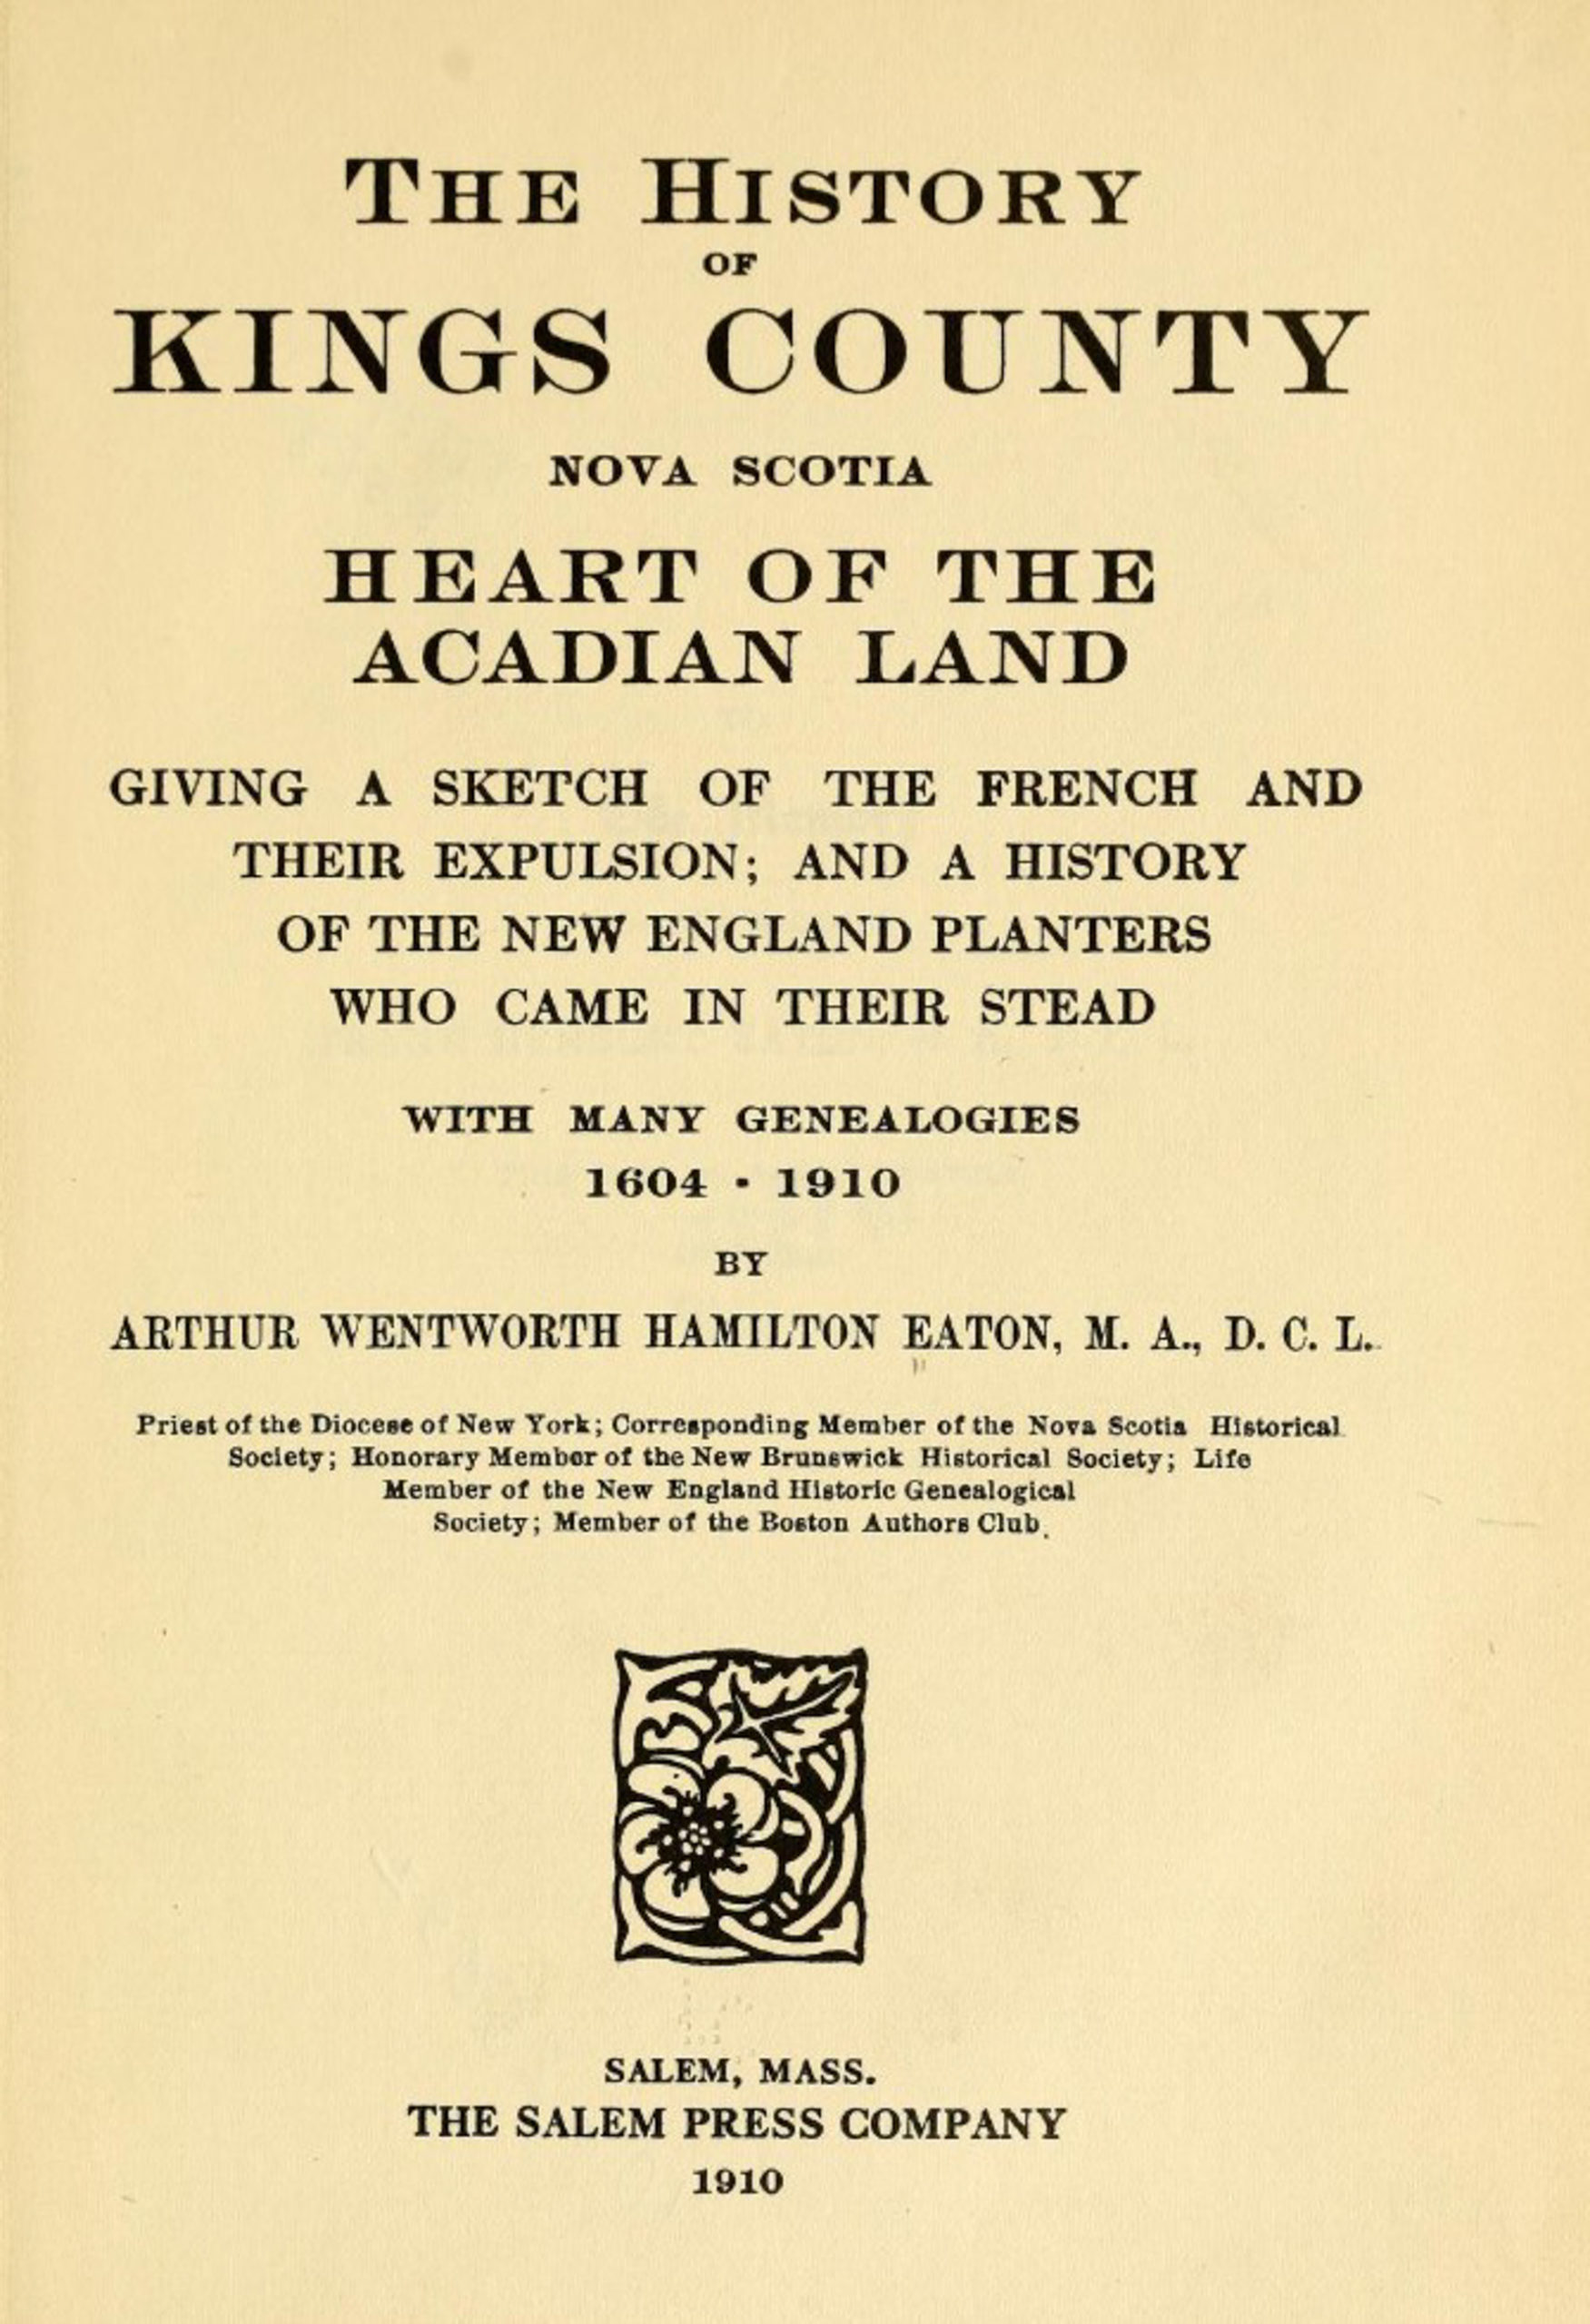 The History of Kings County Nova Scotia by Arthur W. H. Eaton, 1910